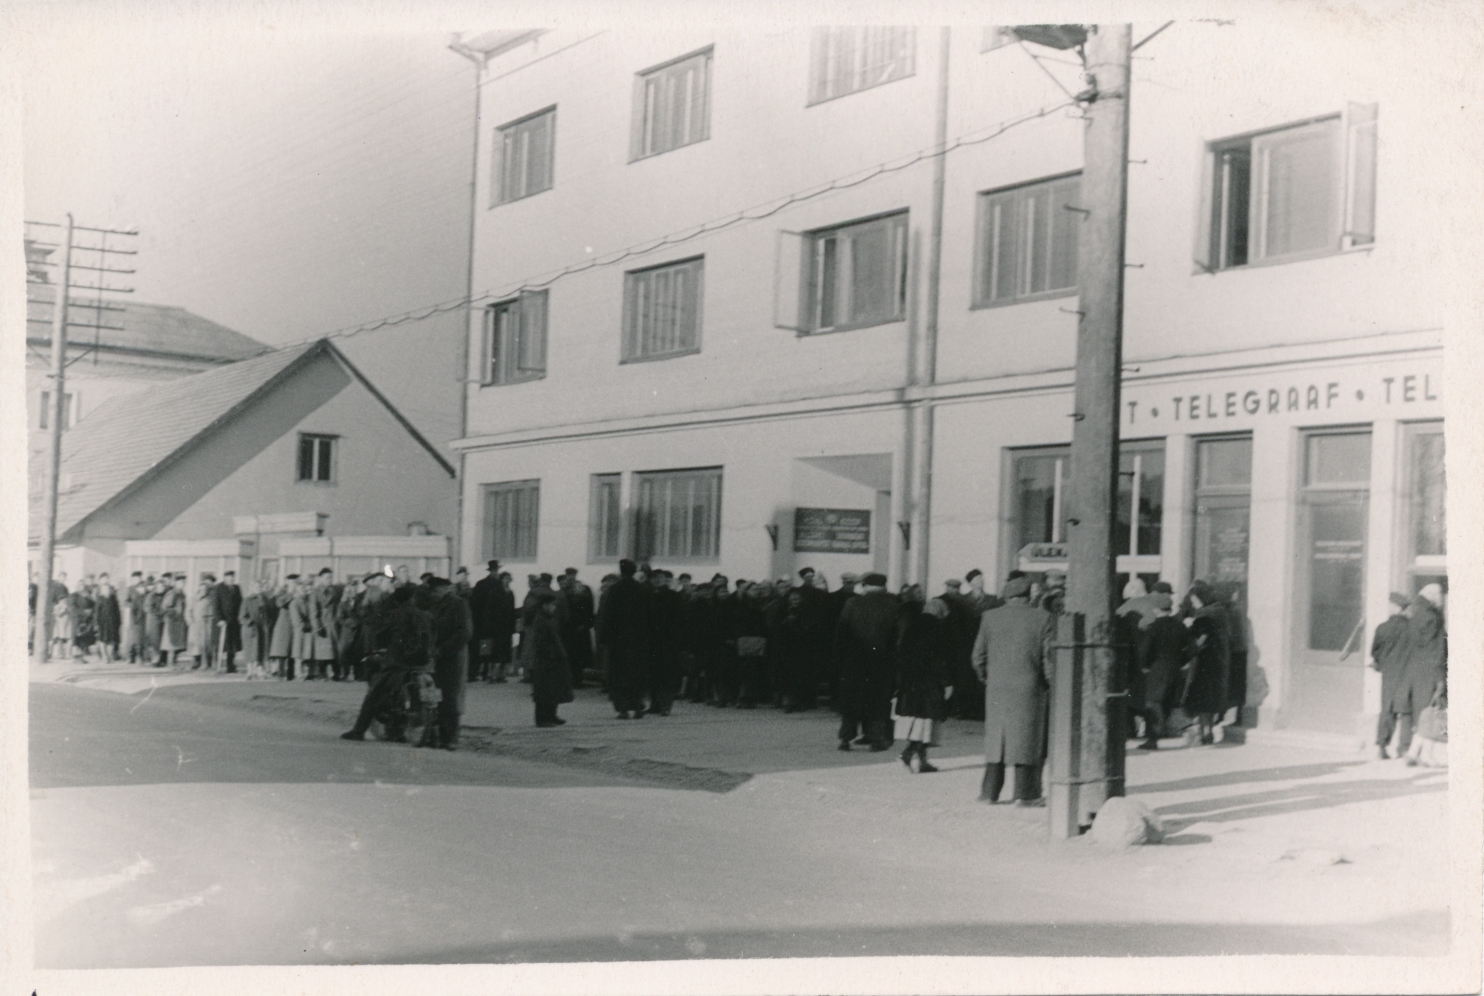 foto, Viljandi, Tallinna tn 11, järjekord postkontori ees, u 1960